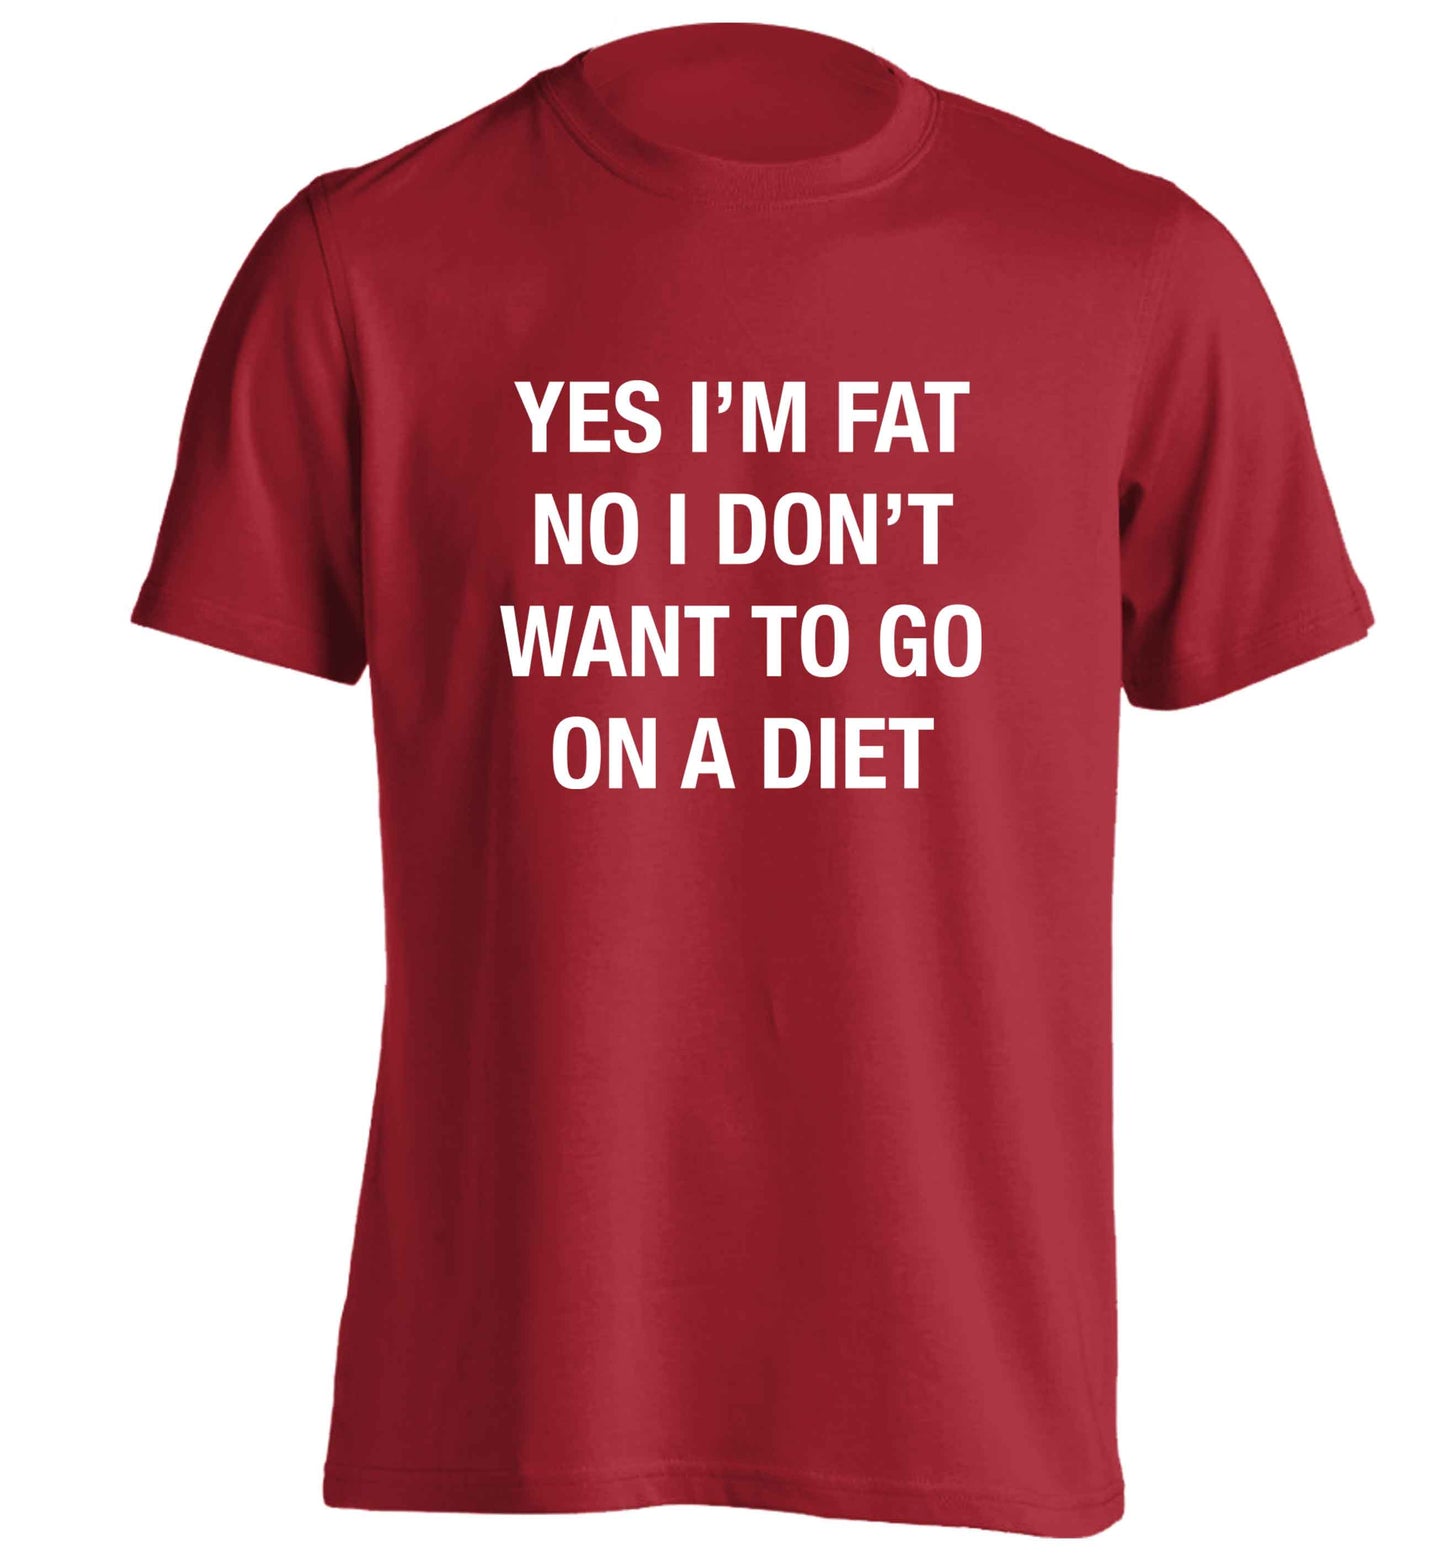 Yes I'm fat, no I don't want to go on a diet adults unisex red Tshirt 2XL